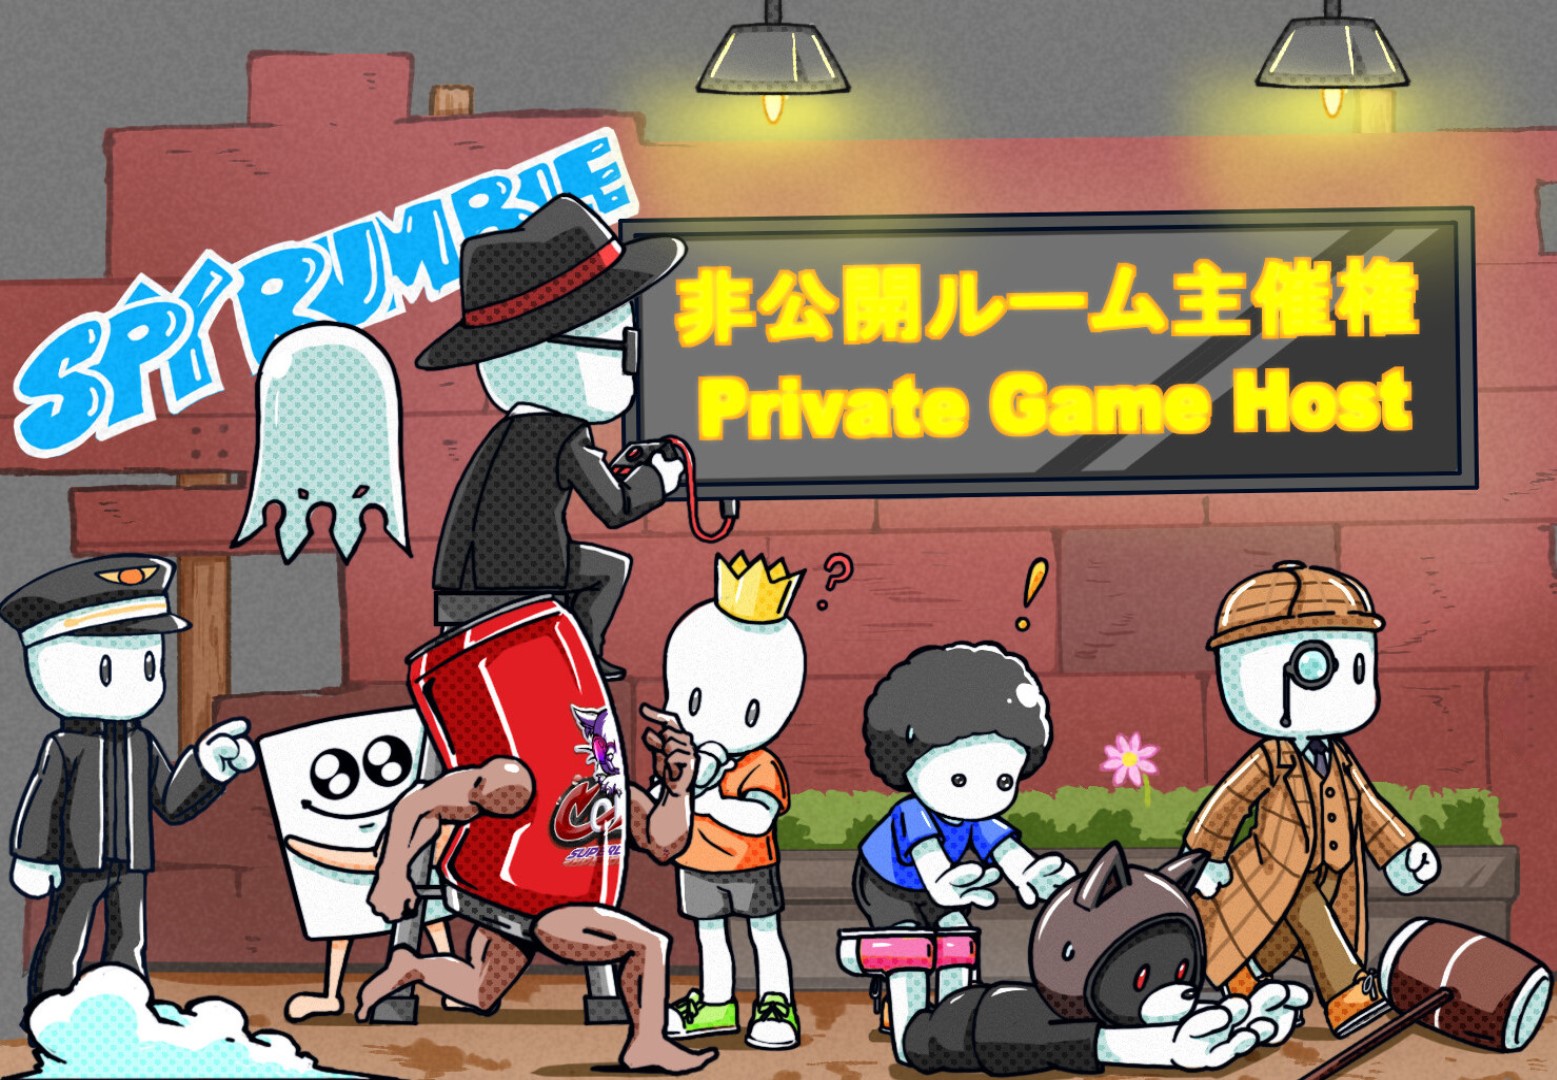 SPY RUMBLE - Private Game Host DLC Steam CD Key